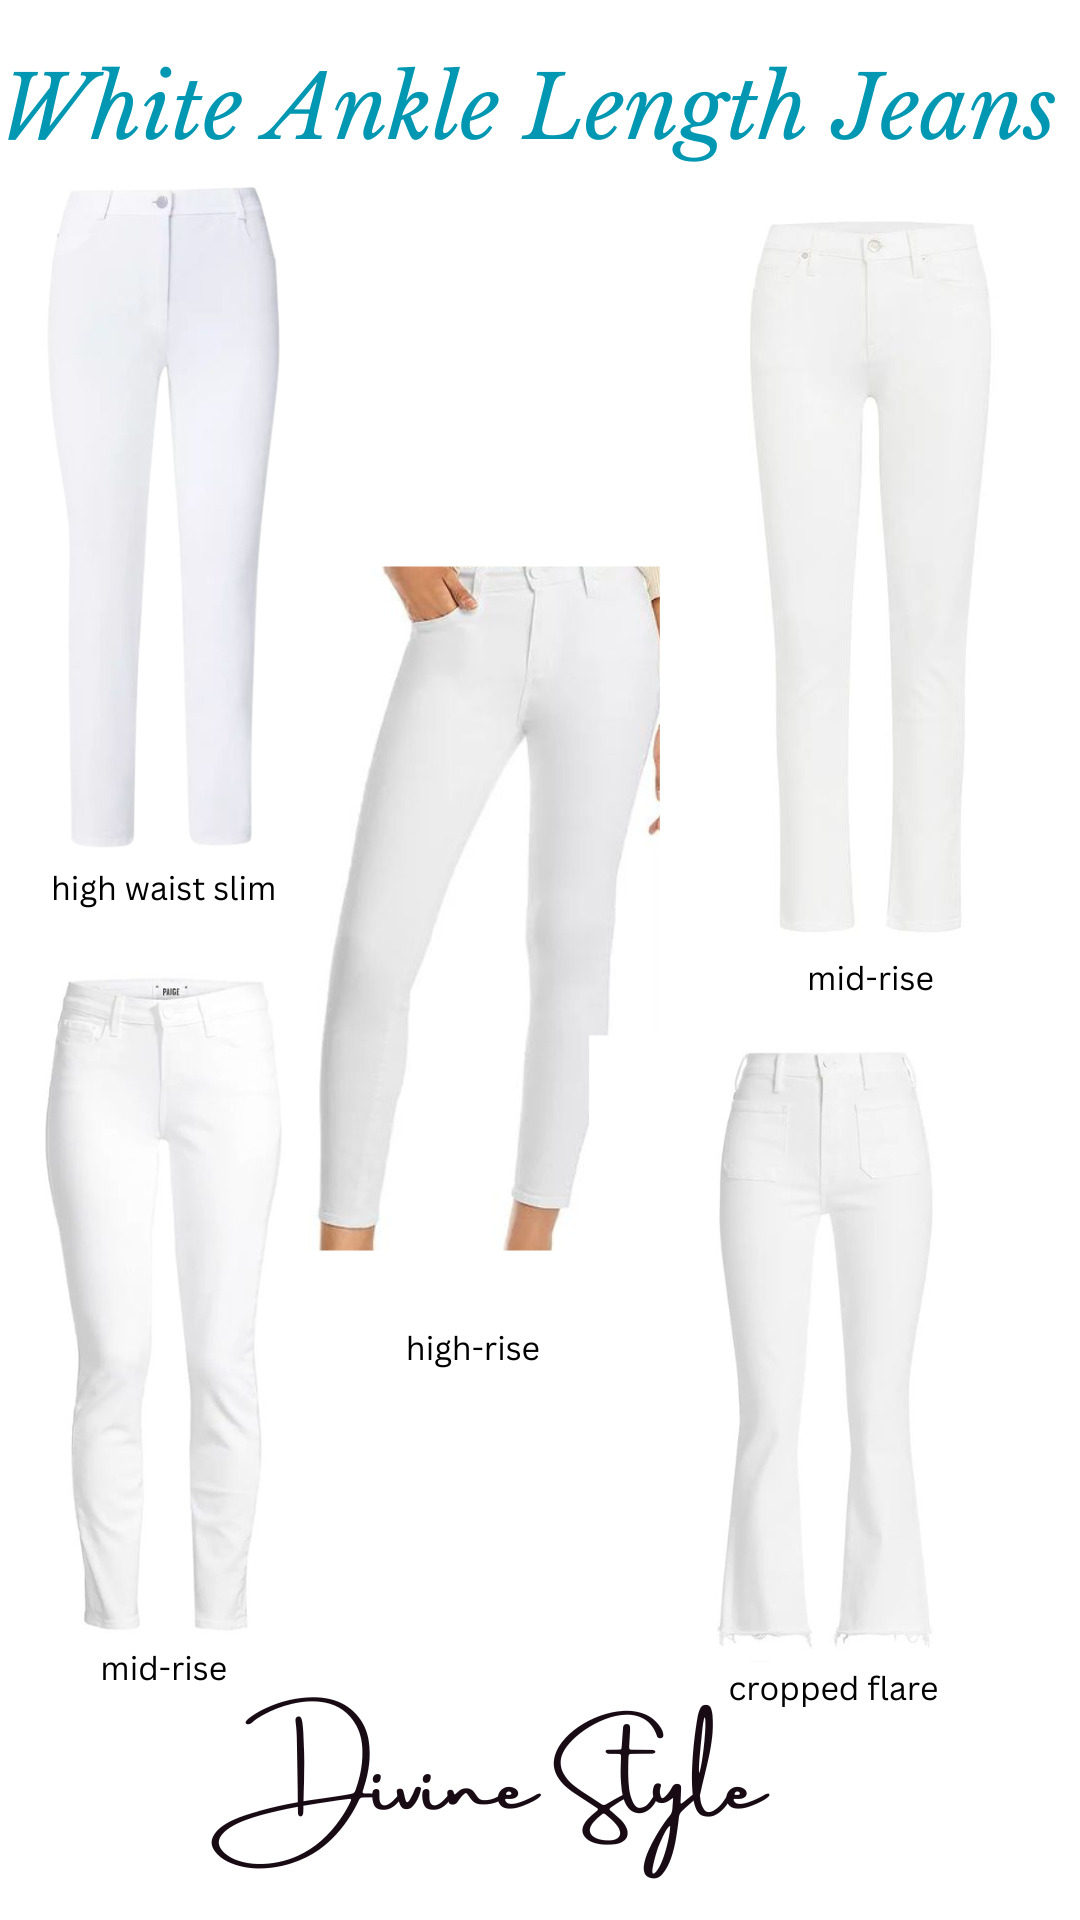 women's white ankle length jeans